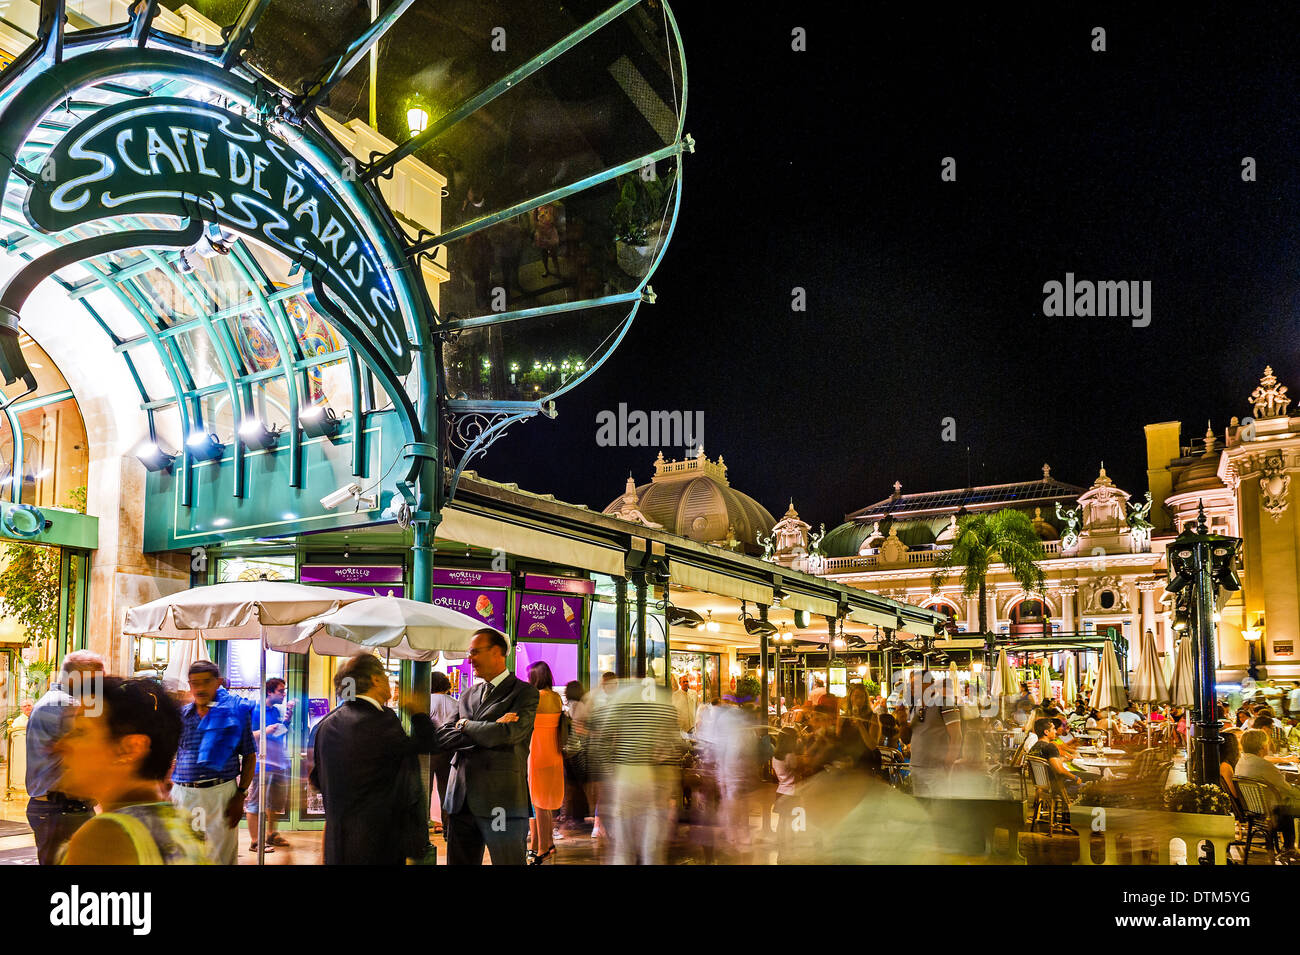 Europe, France, Principality of Monaco, Monte Carlo. The famous Café de Paris. Stock Photo